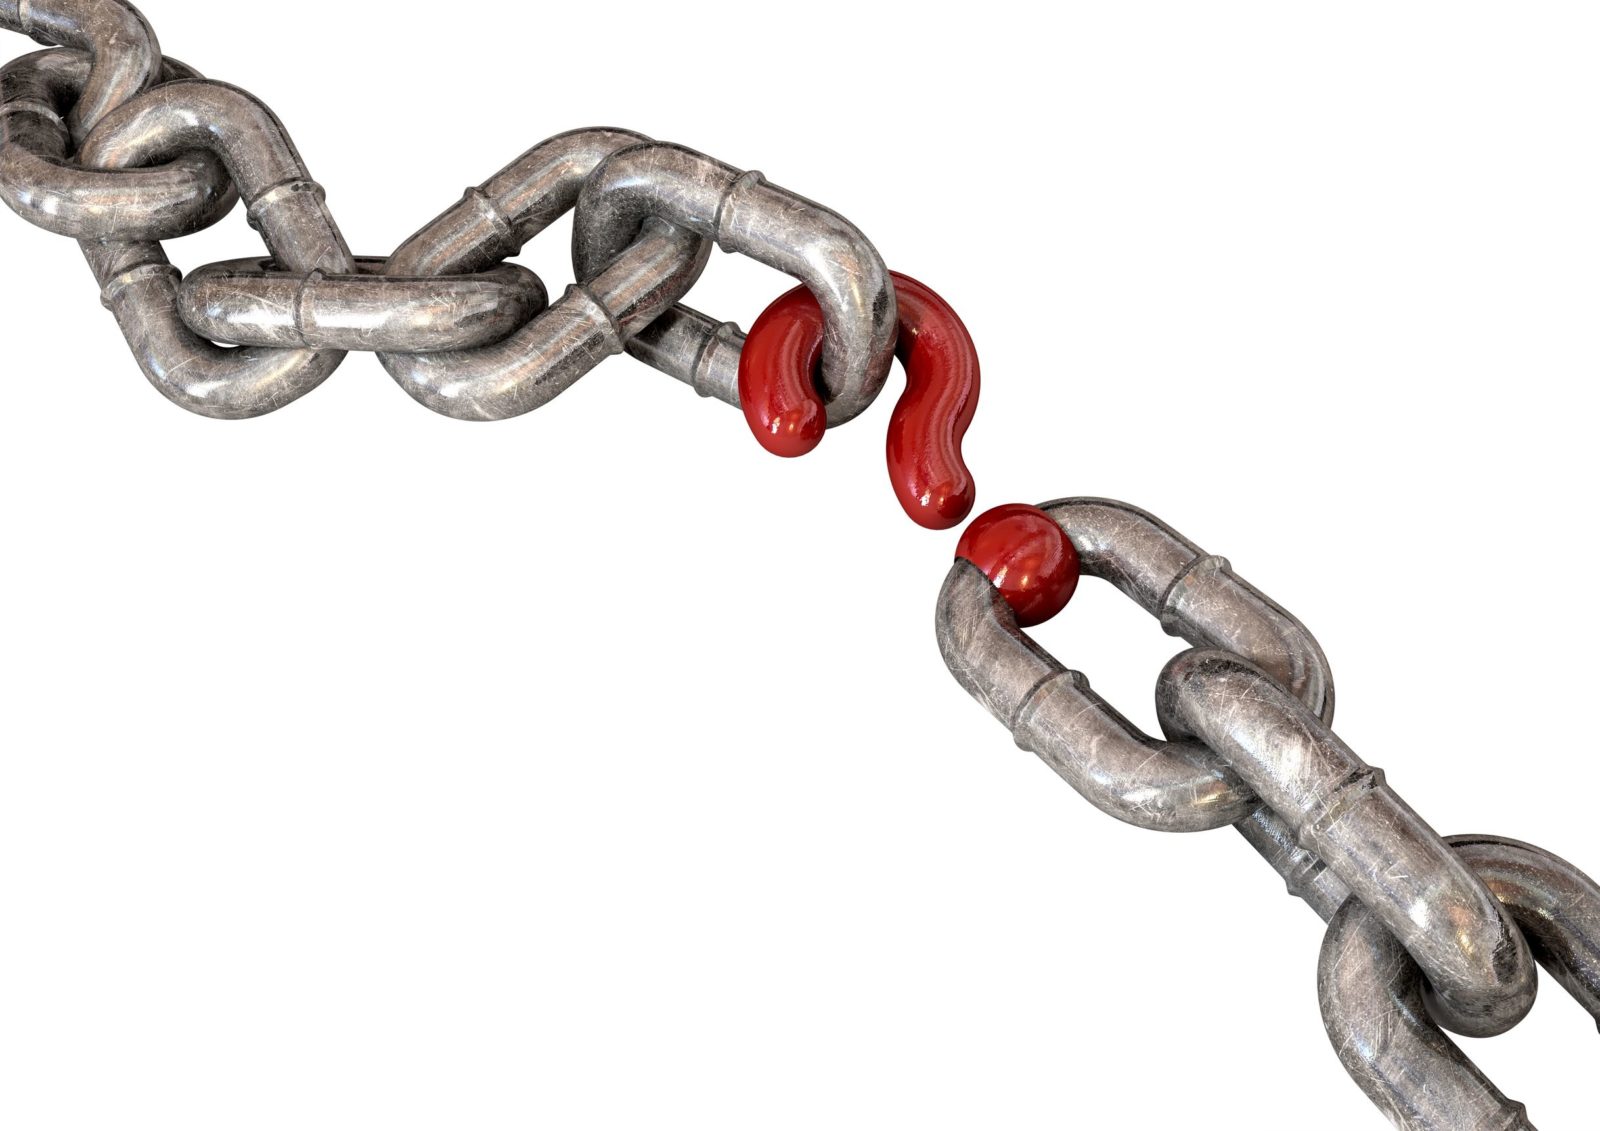 Weak link in the chain